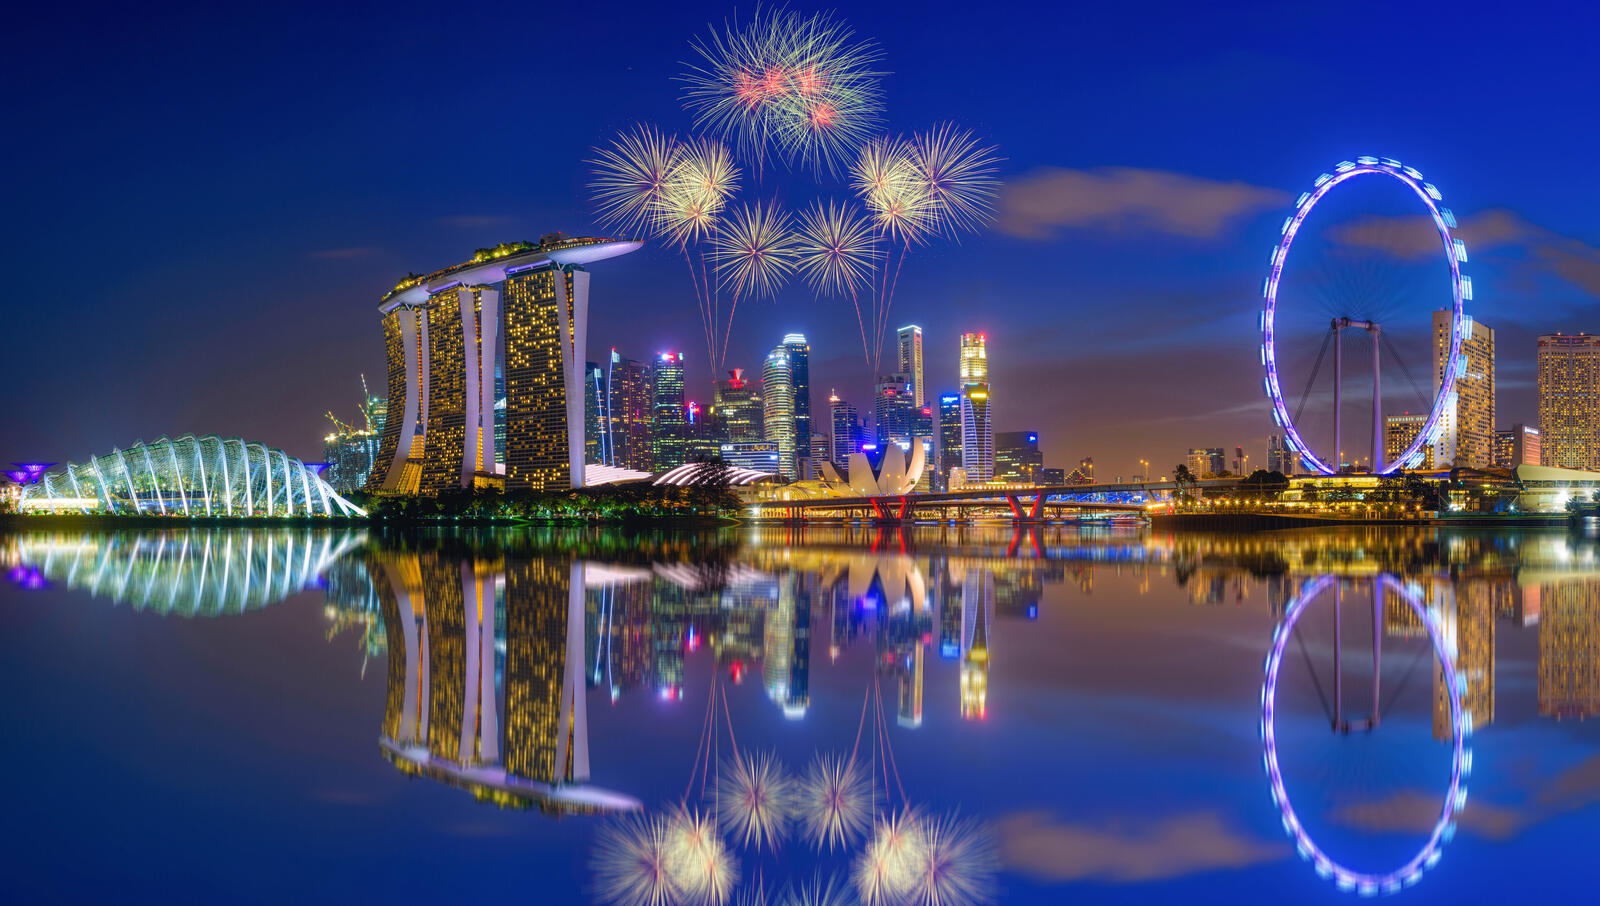 Wallpapers Fireworks Marina Bay Singapore on the desktop